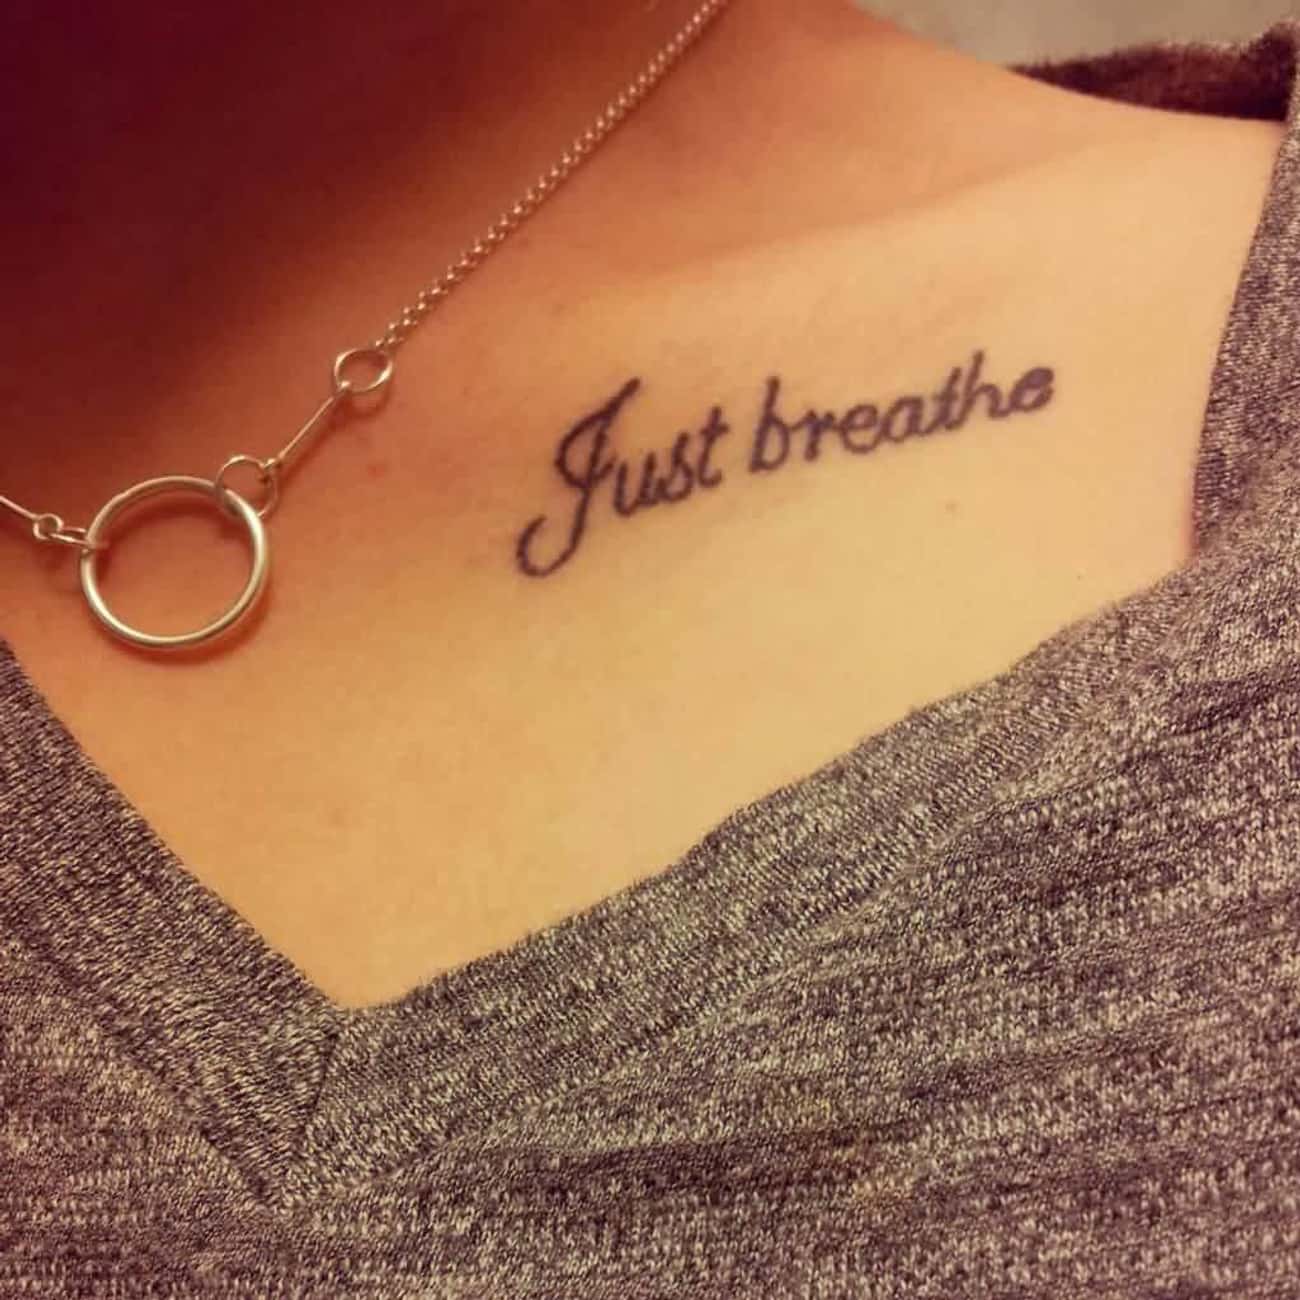 Just Breathe Collar Bone Tattoo